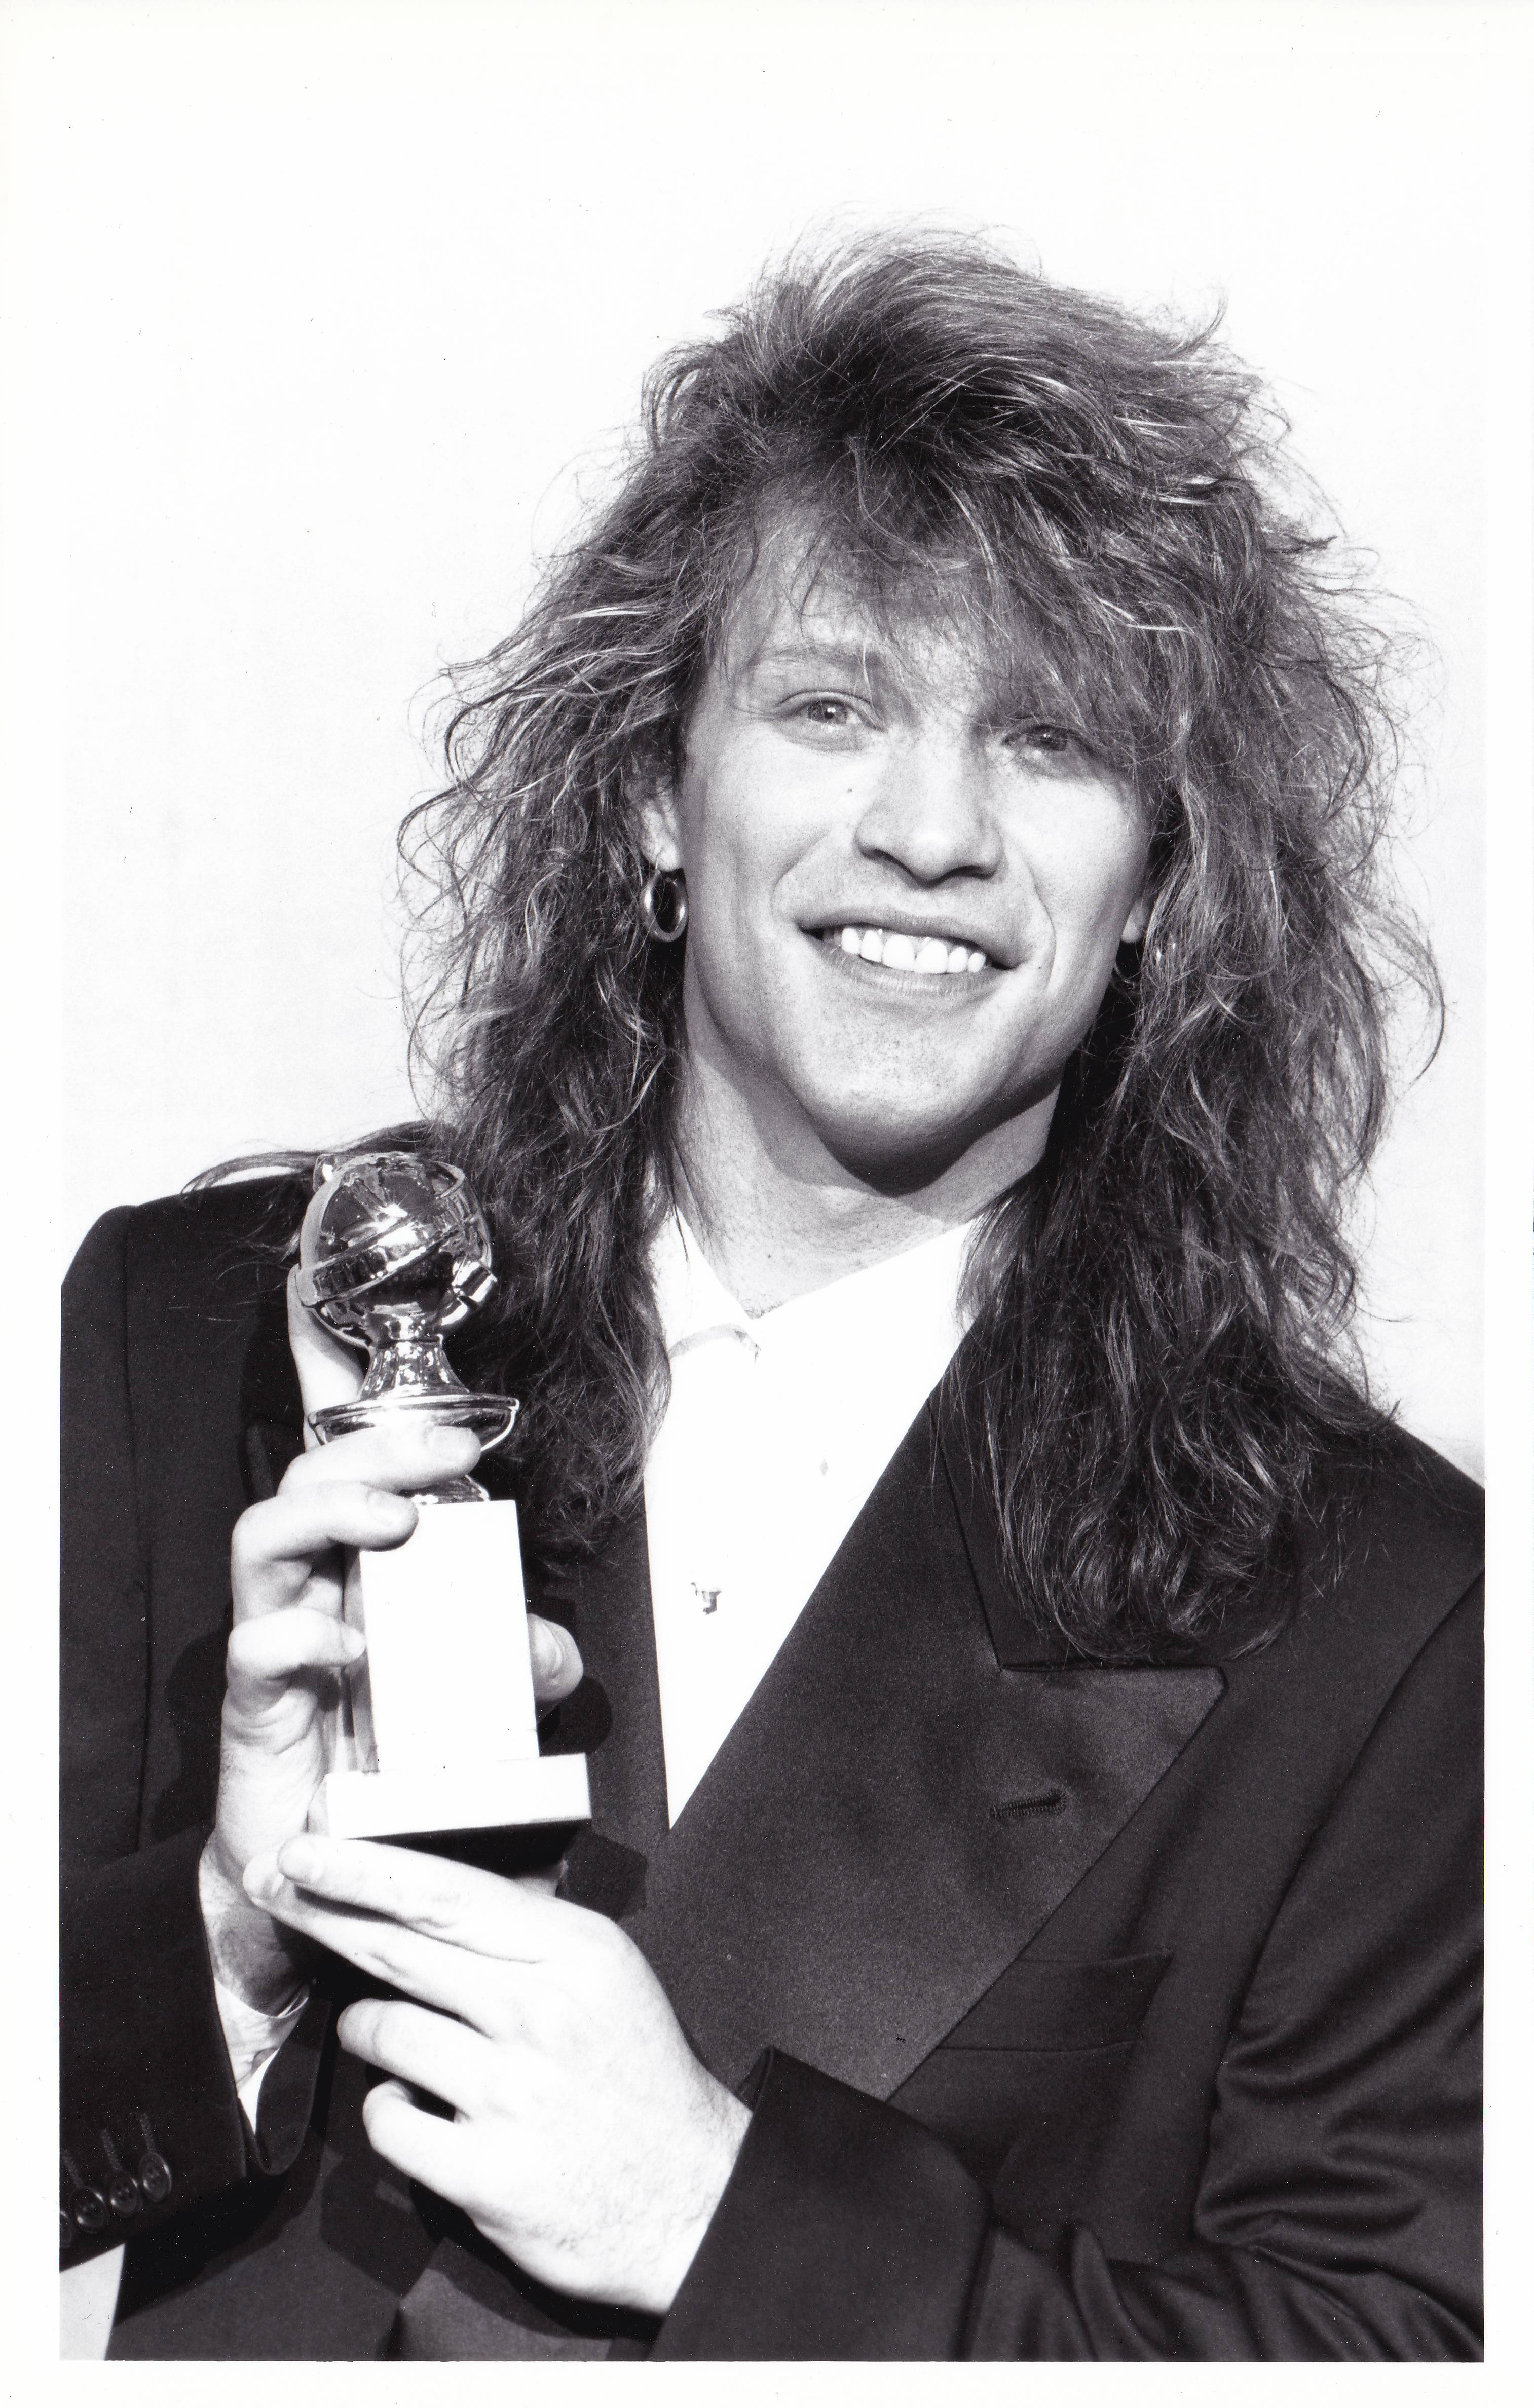 Rockstar Jon Bon Jovi, Golden Globe winner